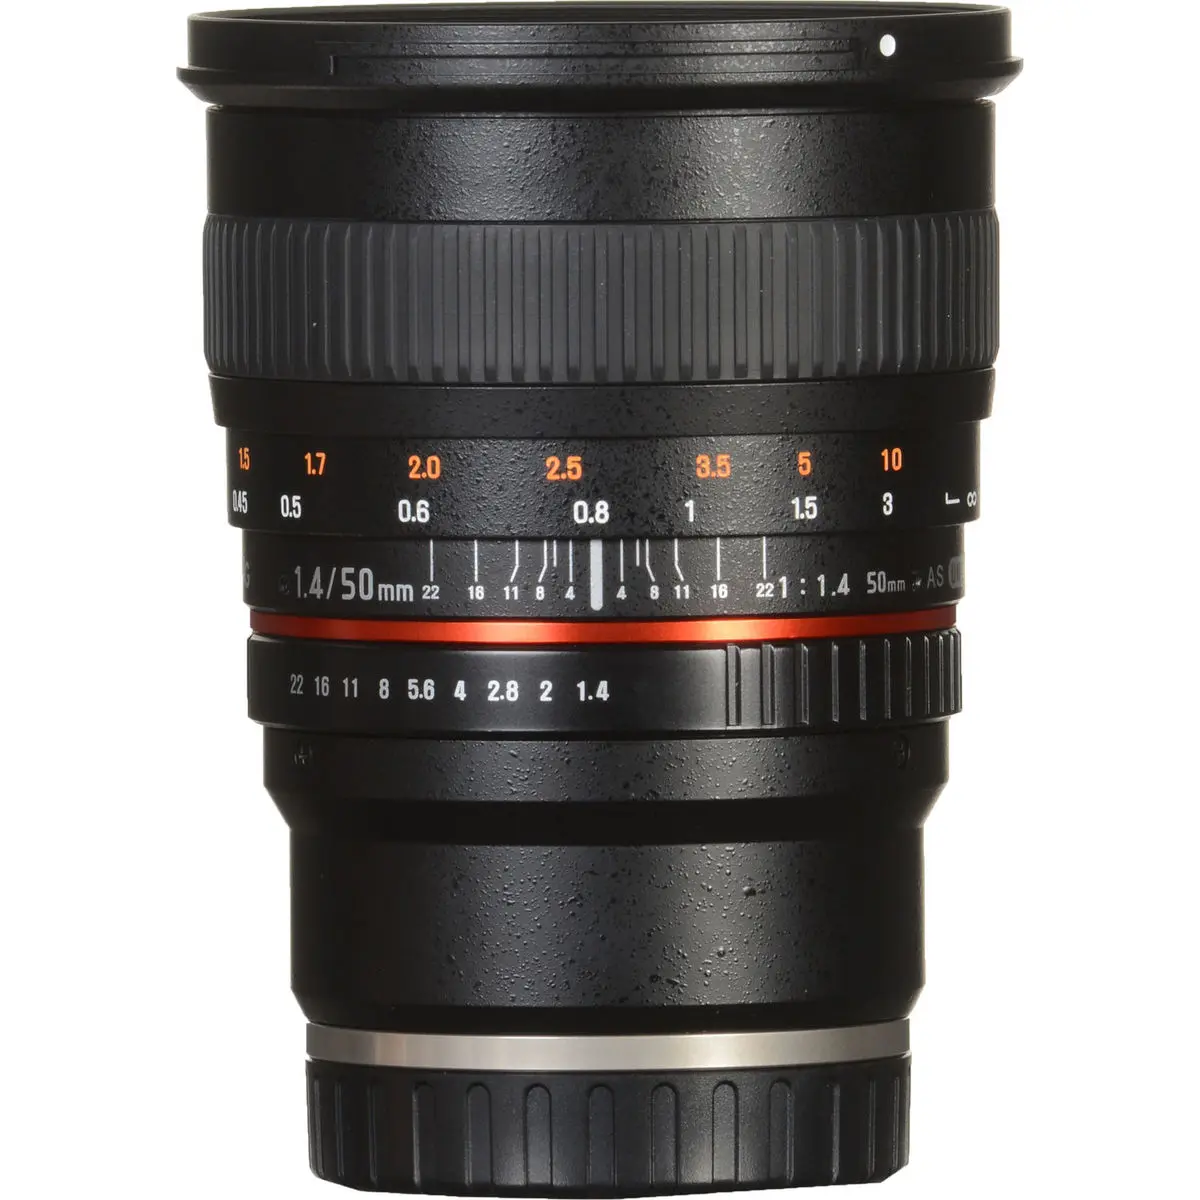 4. Samyang 50 mm f/1.4 AS UMC (Sony A) Lens